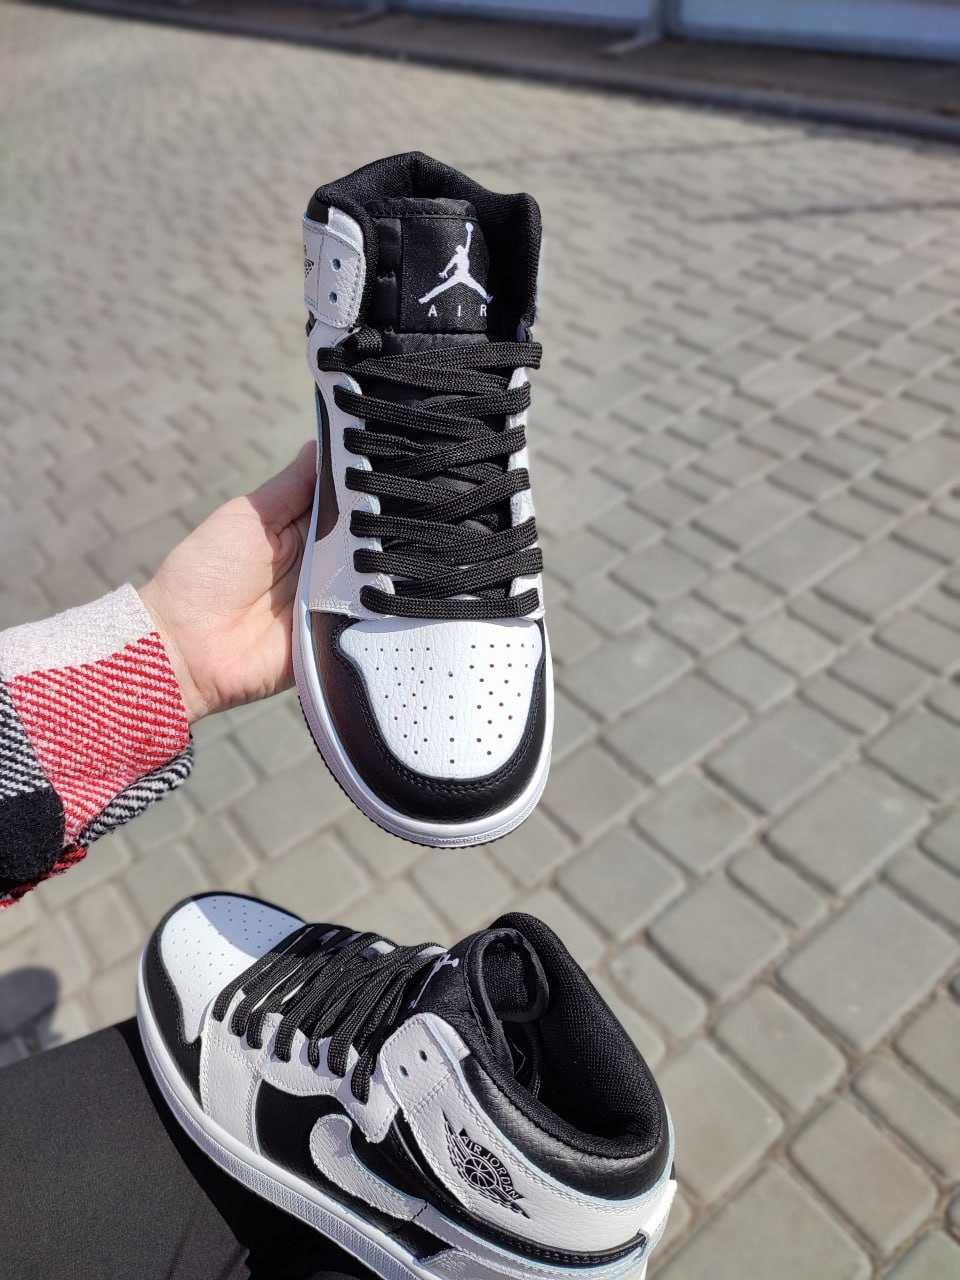 Buty wysokie Nike Air Jordan 1 Retro Mid Tuxedo 36-45r